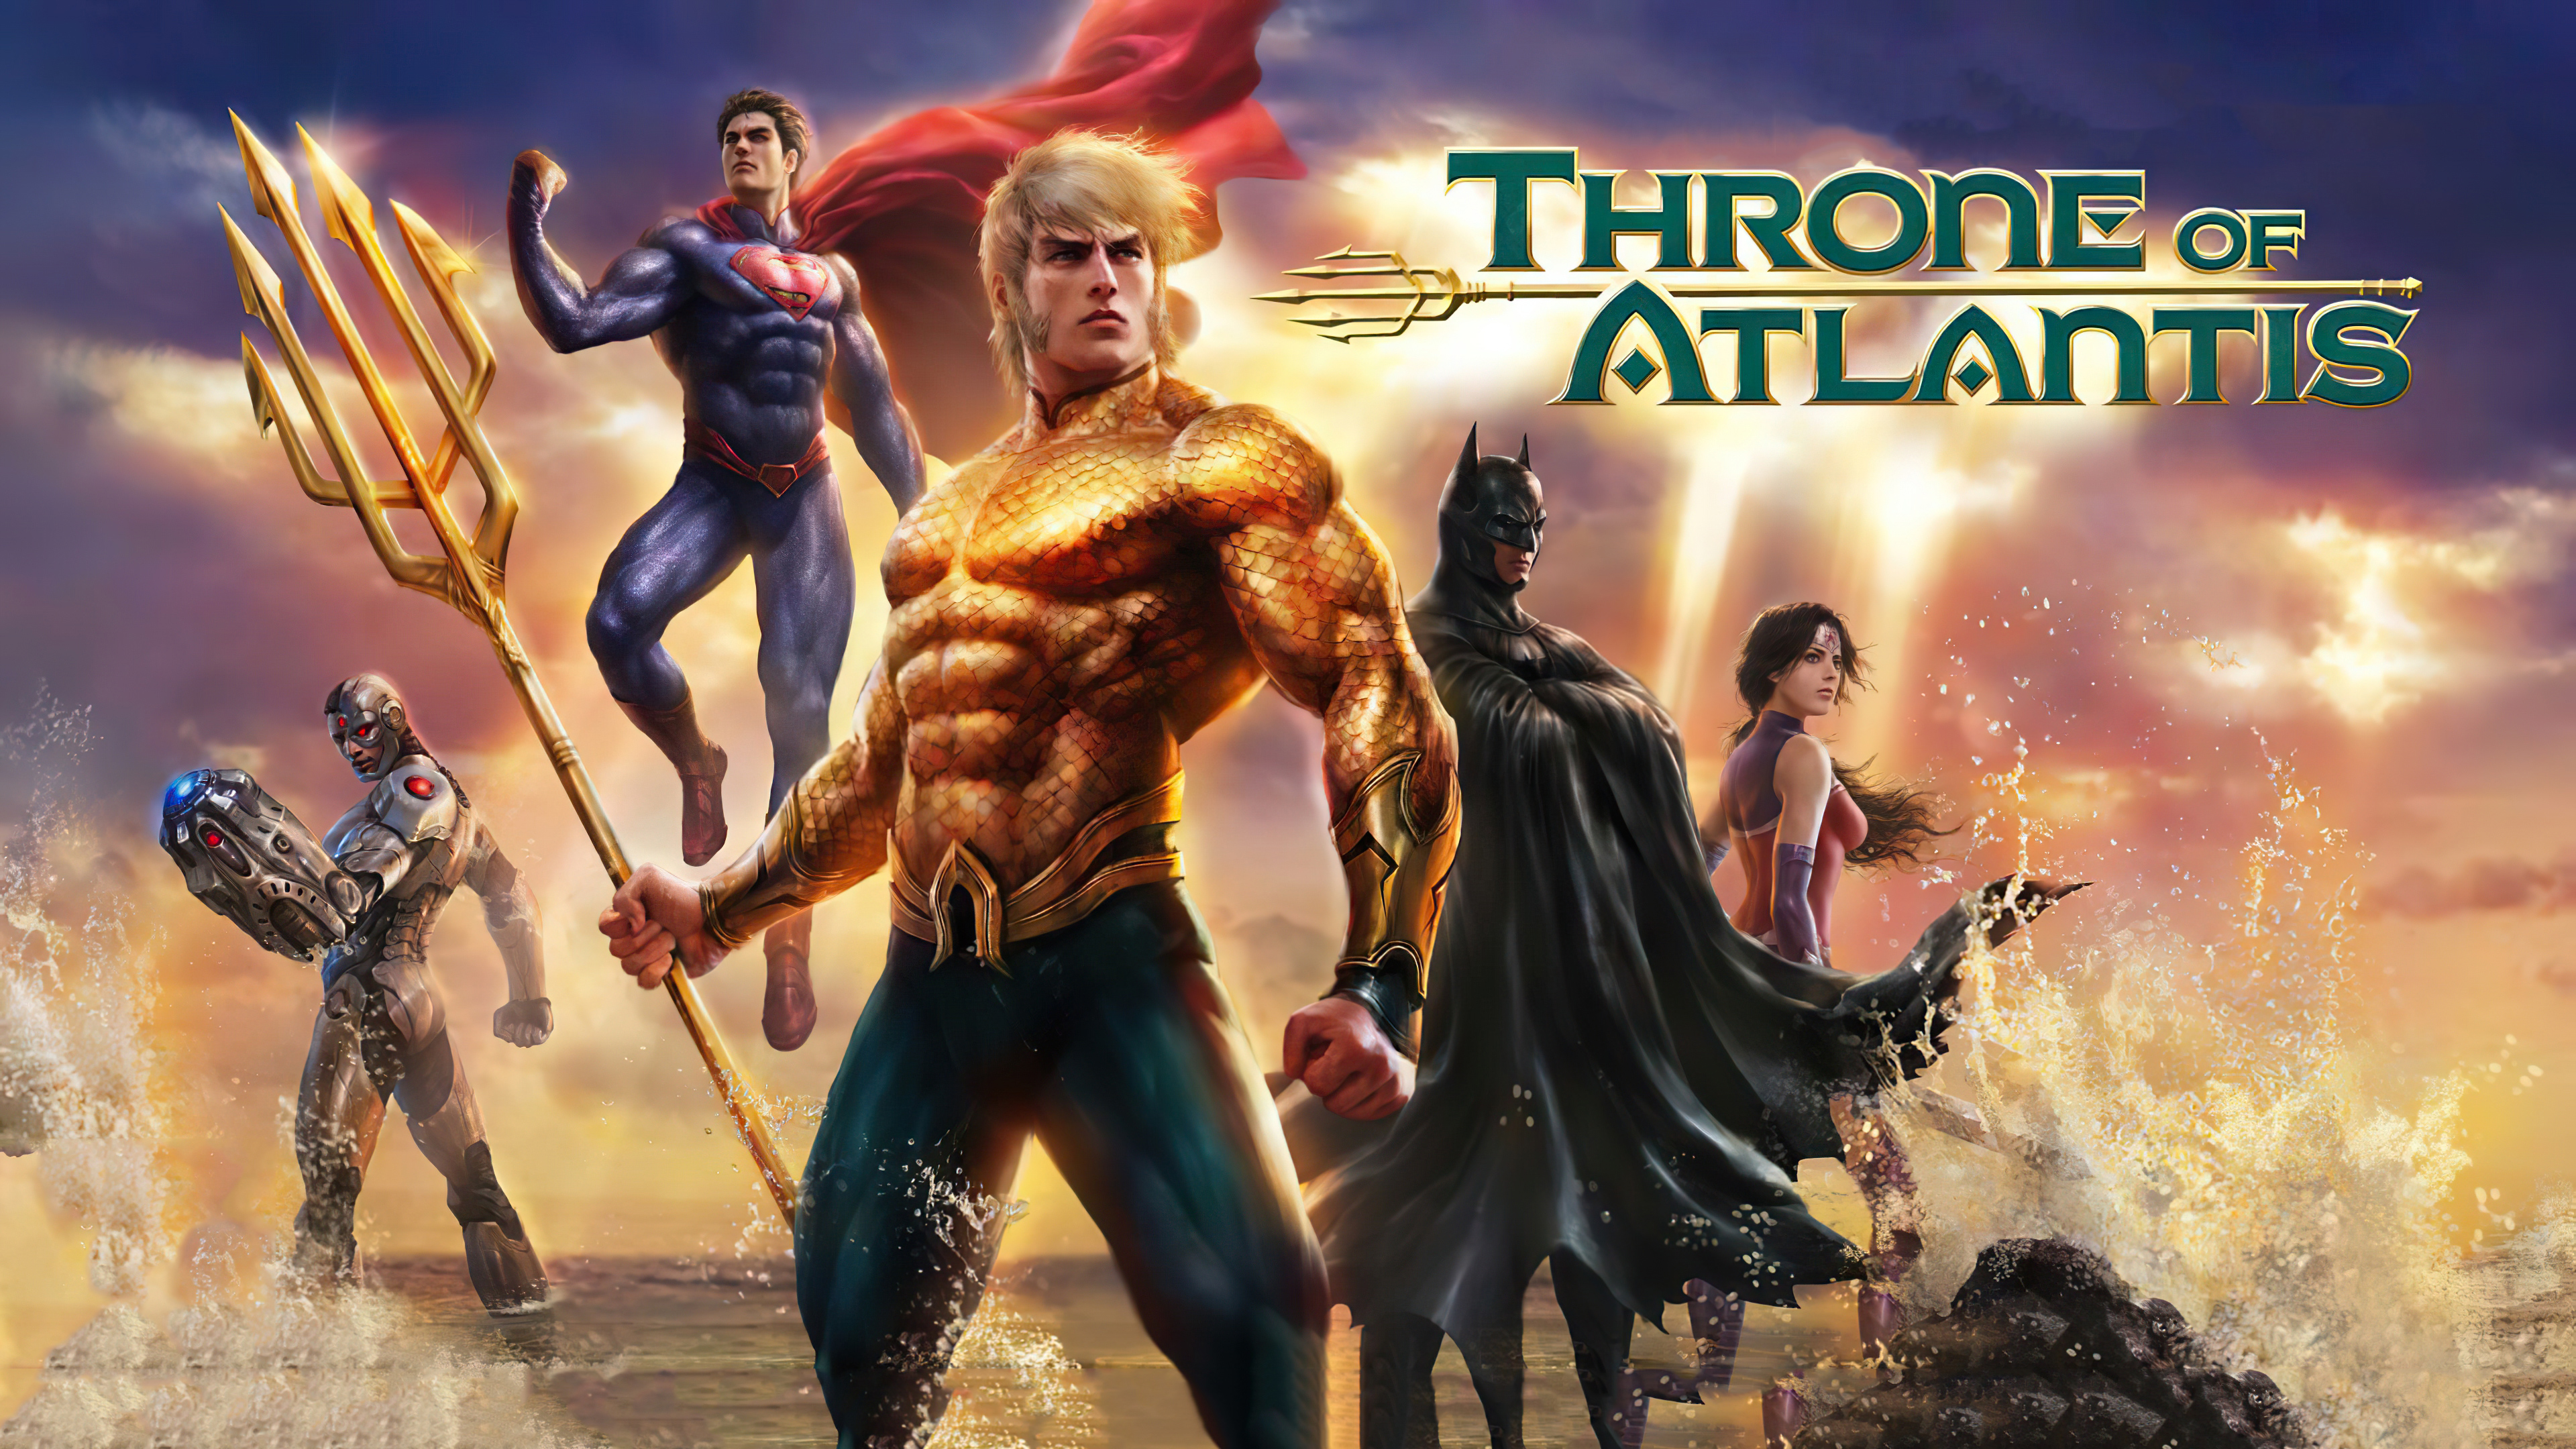 HD desktop wallpaper: Batman, Superman, Movie, Diana Prince, Aquaman,  Wonder Woman, Cyborg (Dc Comics), Justice League, Justice League: Throne Of  Atlantis, Arthur Curry download free picture #499679